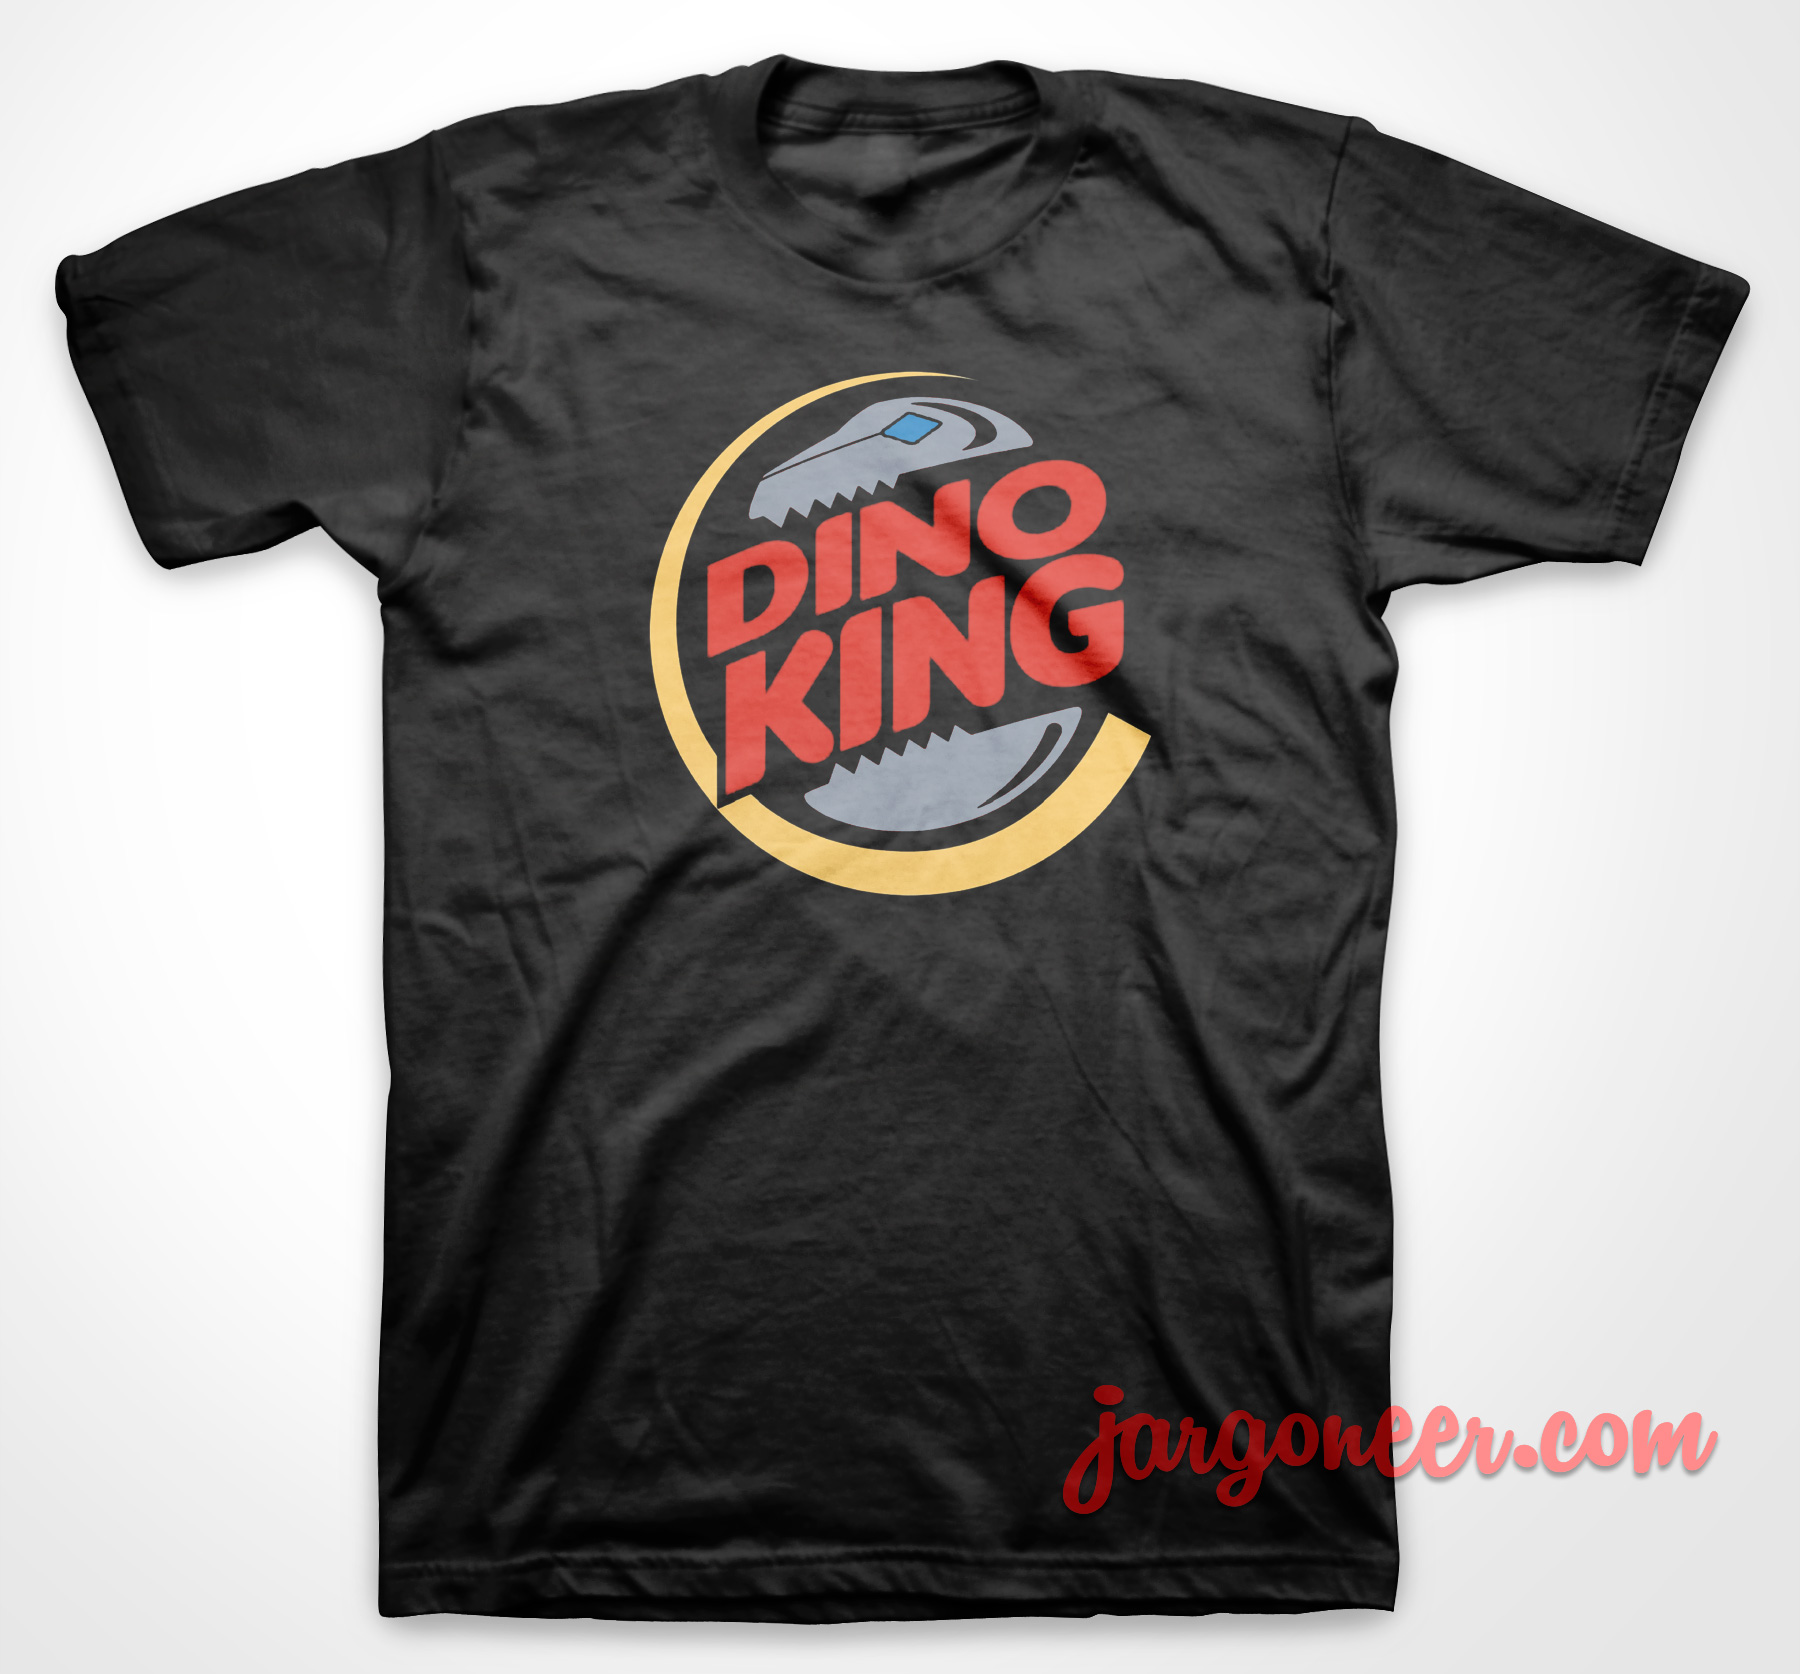 Dino King Parody - Shop Unique Graphic Cool Shirt Designs